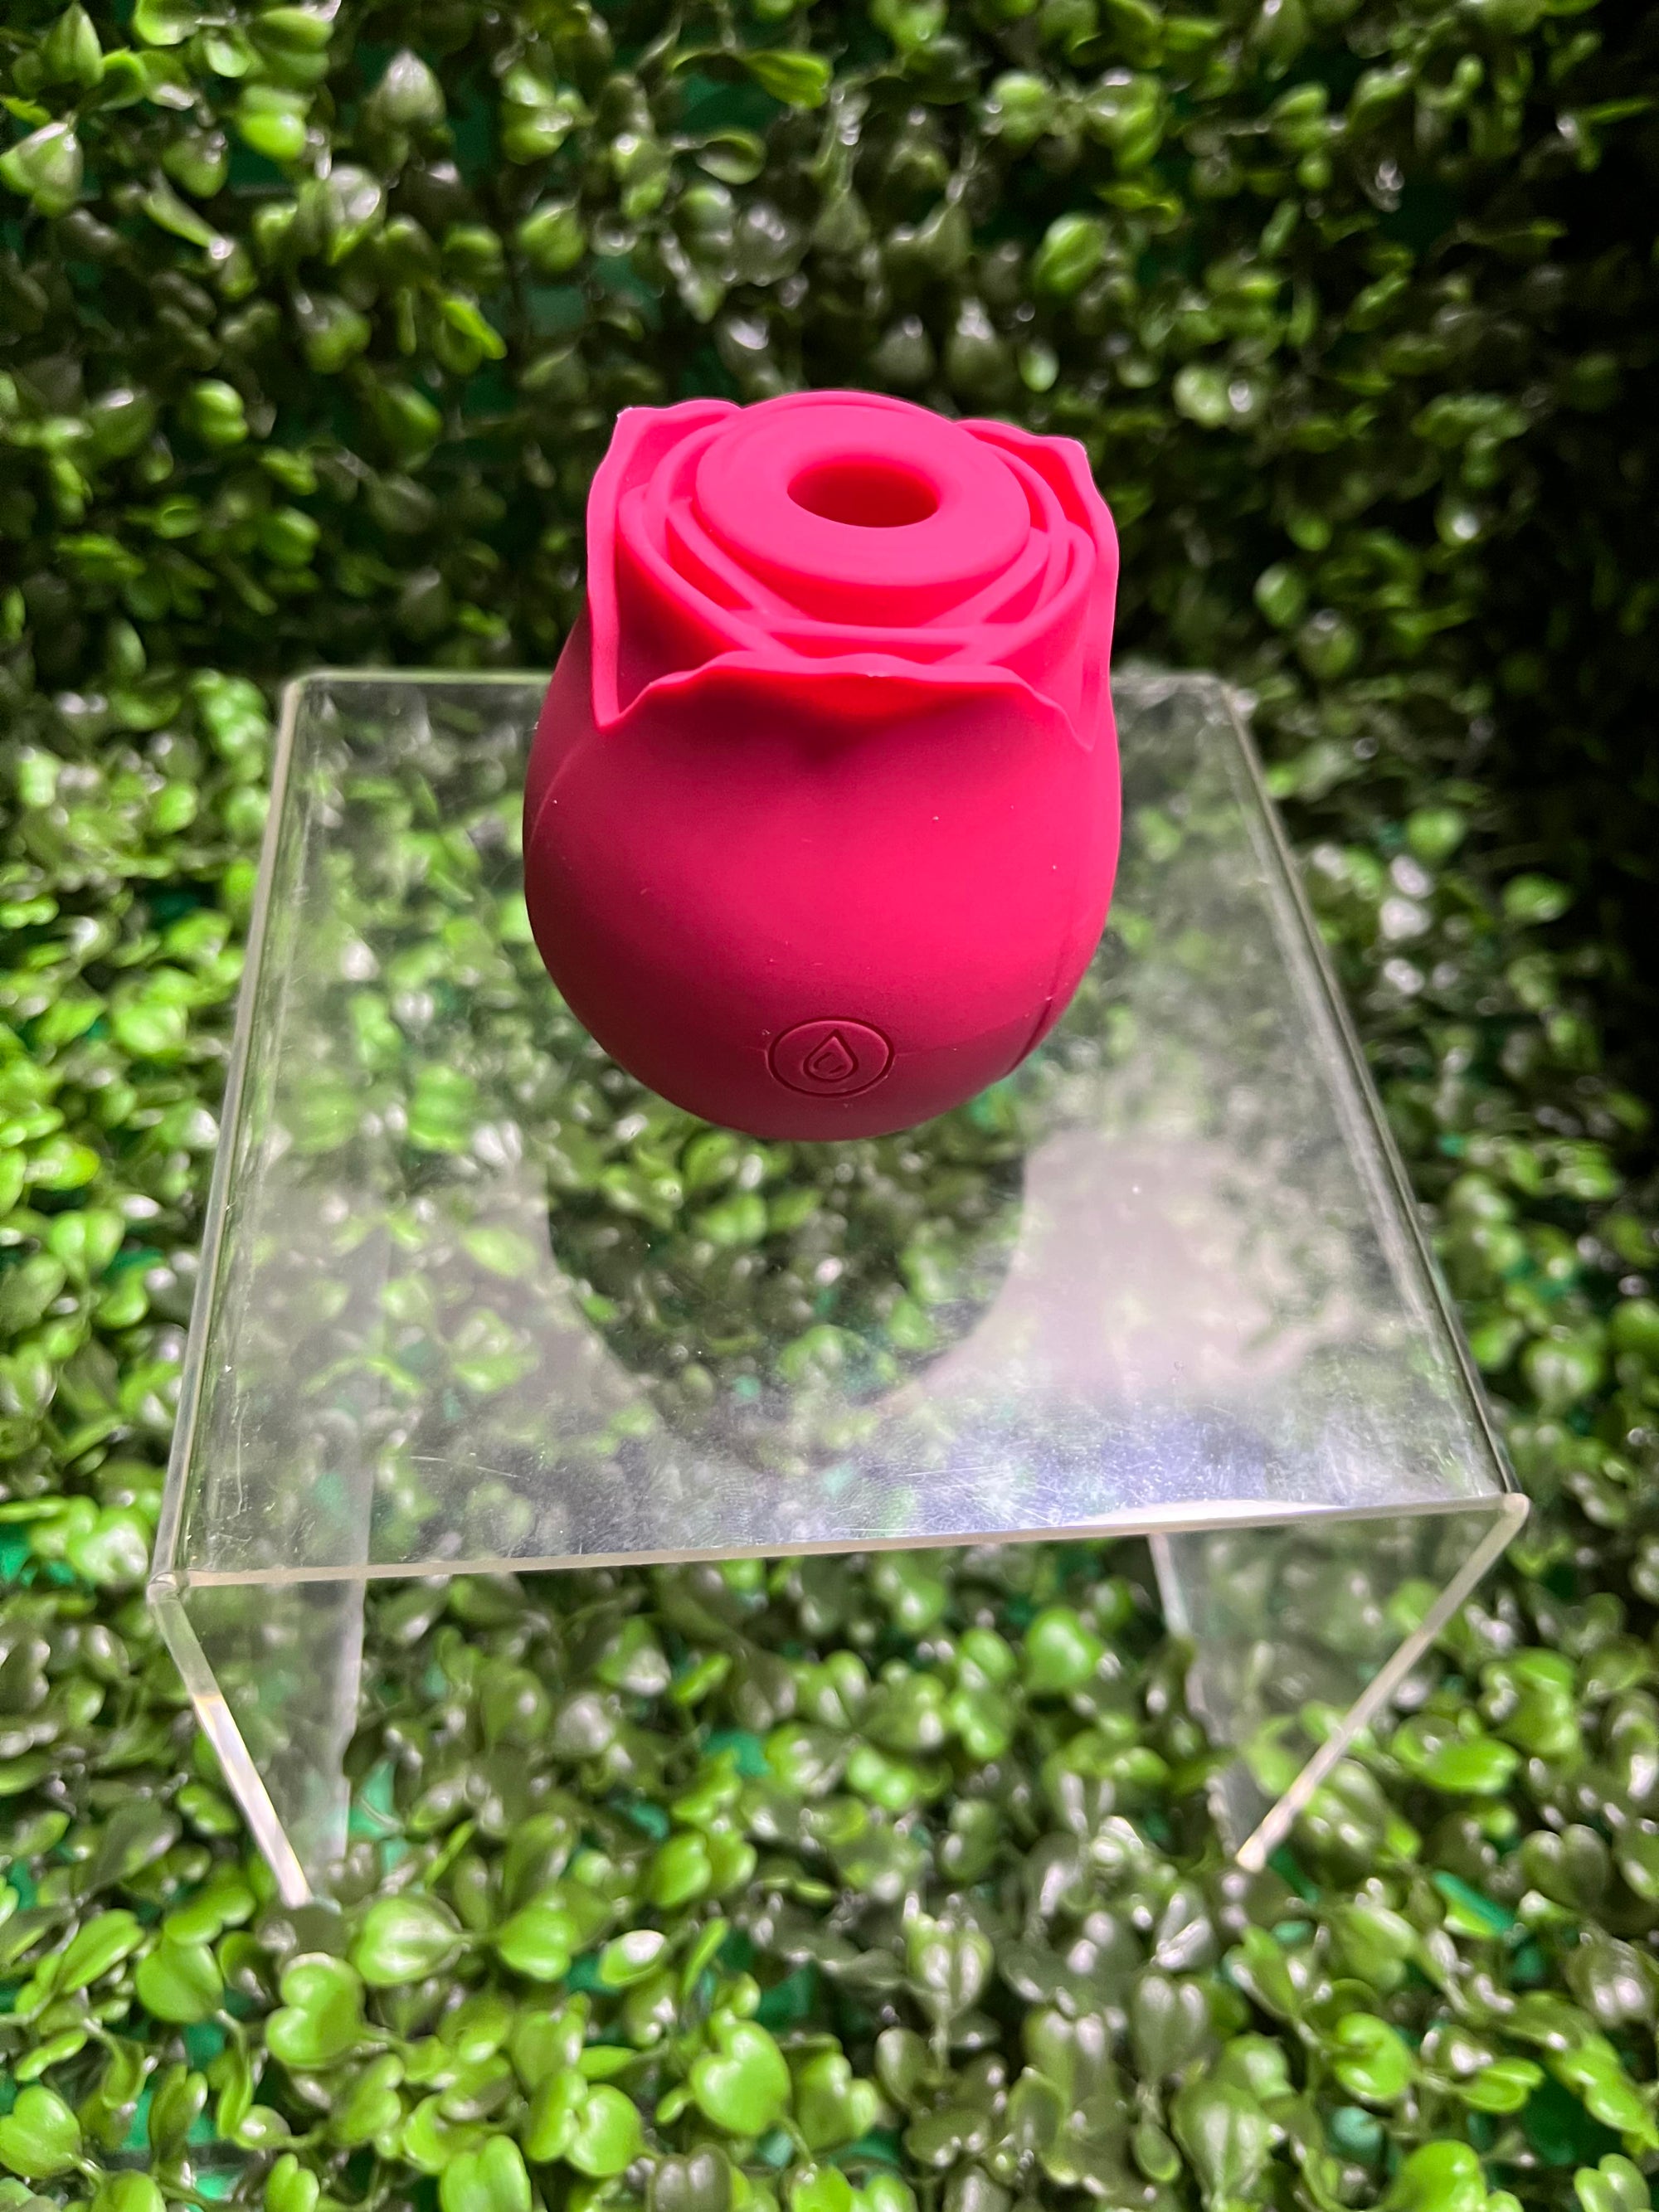 The Rose Clitoral Sucking Vibrator